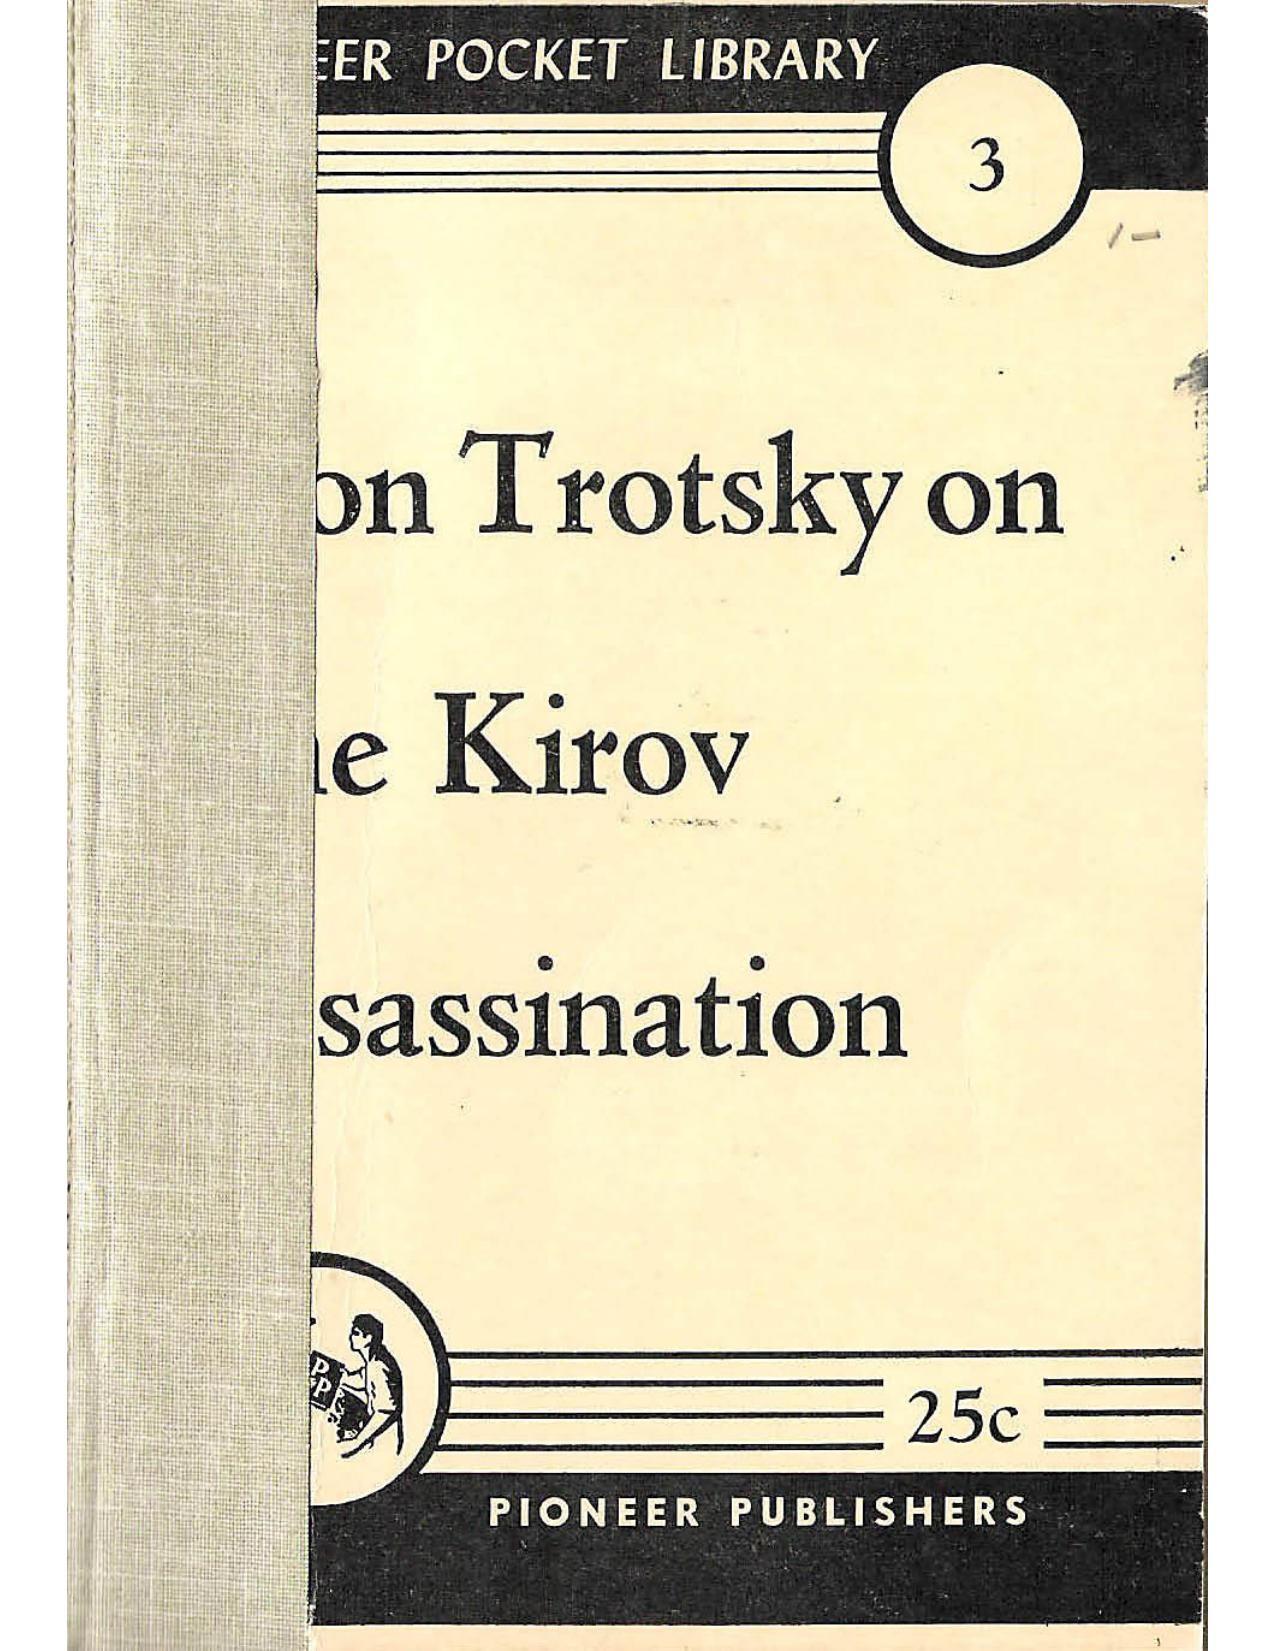 The Kirov Assassination (1935) by Leon Trotsky